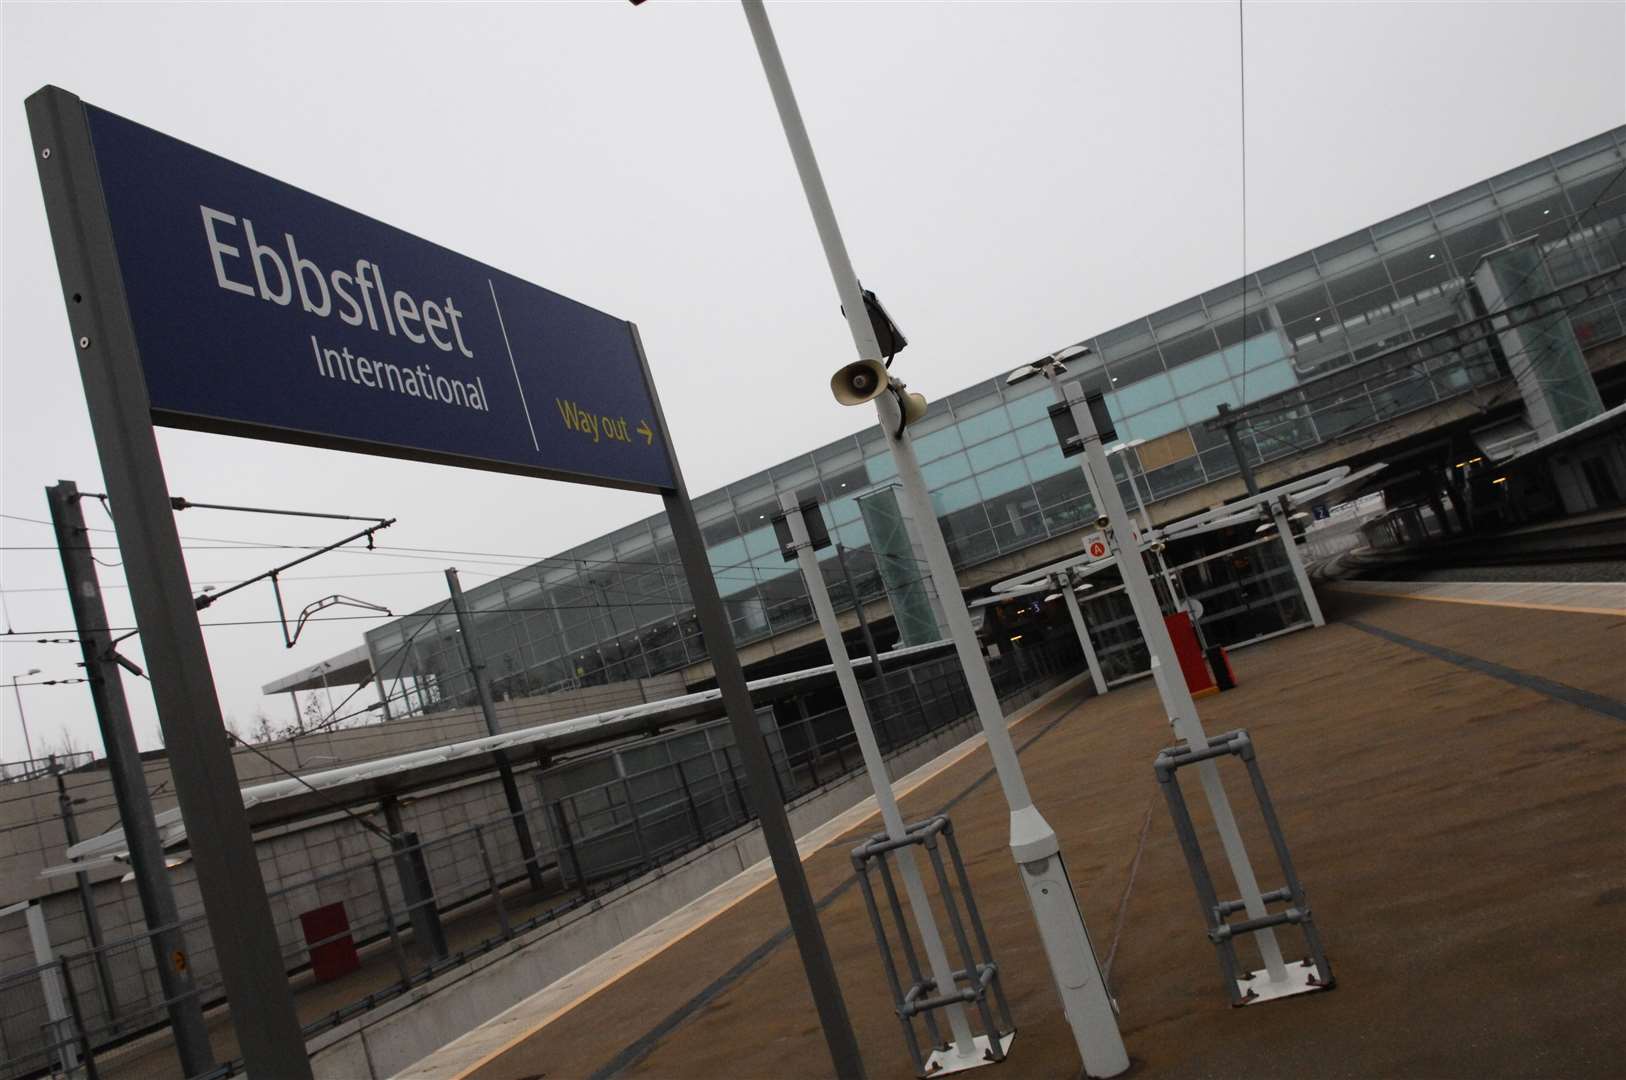 Ebbsfleet international train station. Picture: Nick Johnson